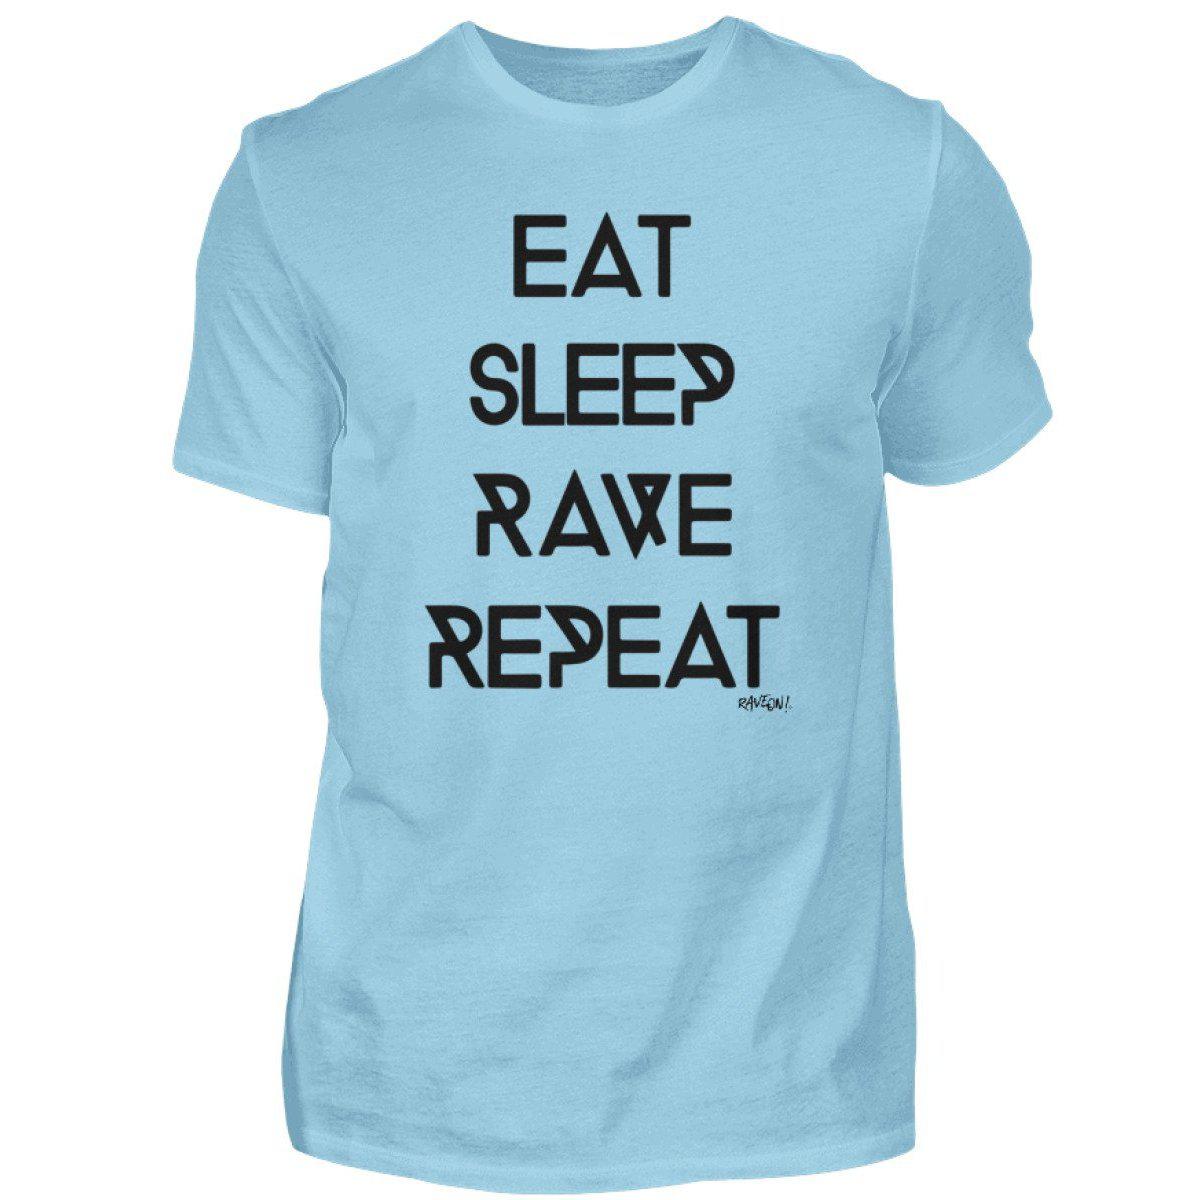 EAT SLEEP RAVE REPEAT - Rave On!® - Premiumshirt Herren Premium Shirt Sky Blue / S - Rave On!® der Club & Techno Szene Shop für Coole Junge Mode Streetwear Style & Fashion Outfits + Festival 420 Stuff